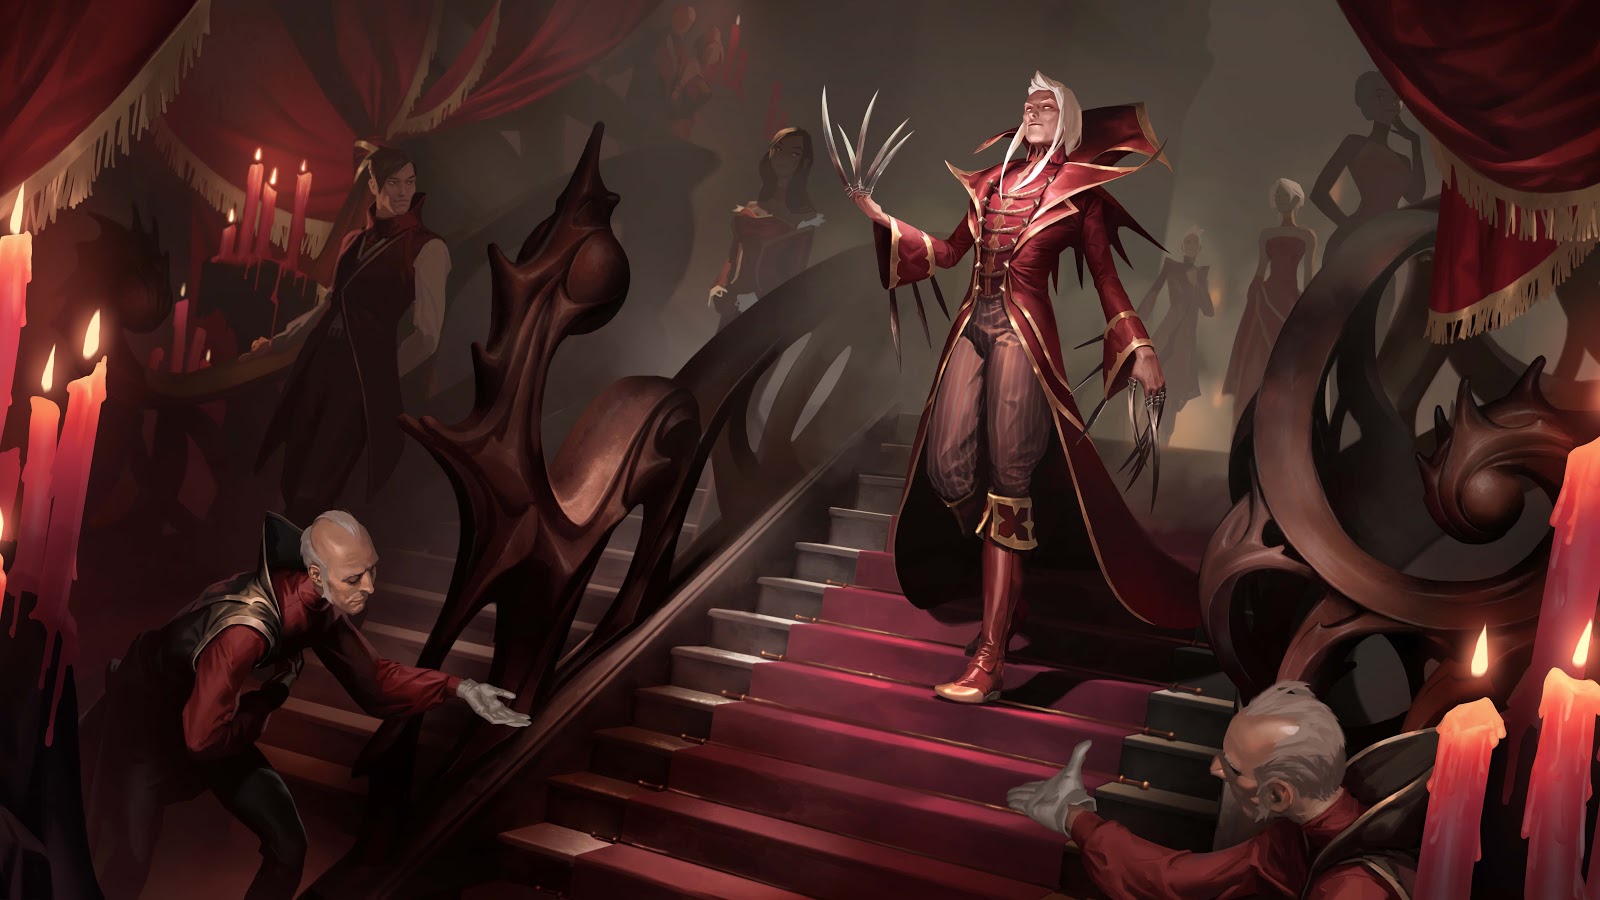 Vladamir descends a staircase as his servants bow before him.